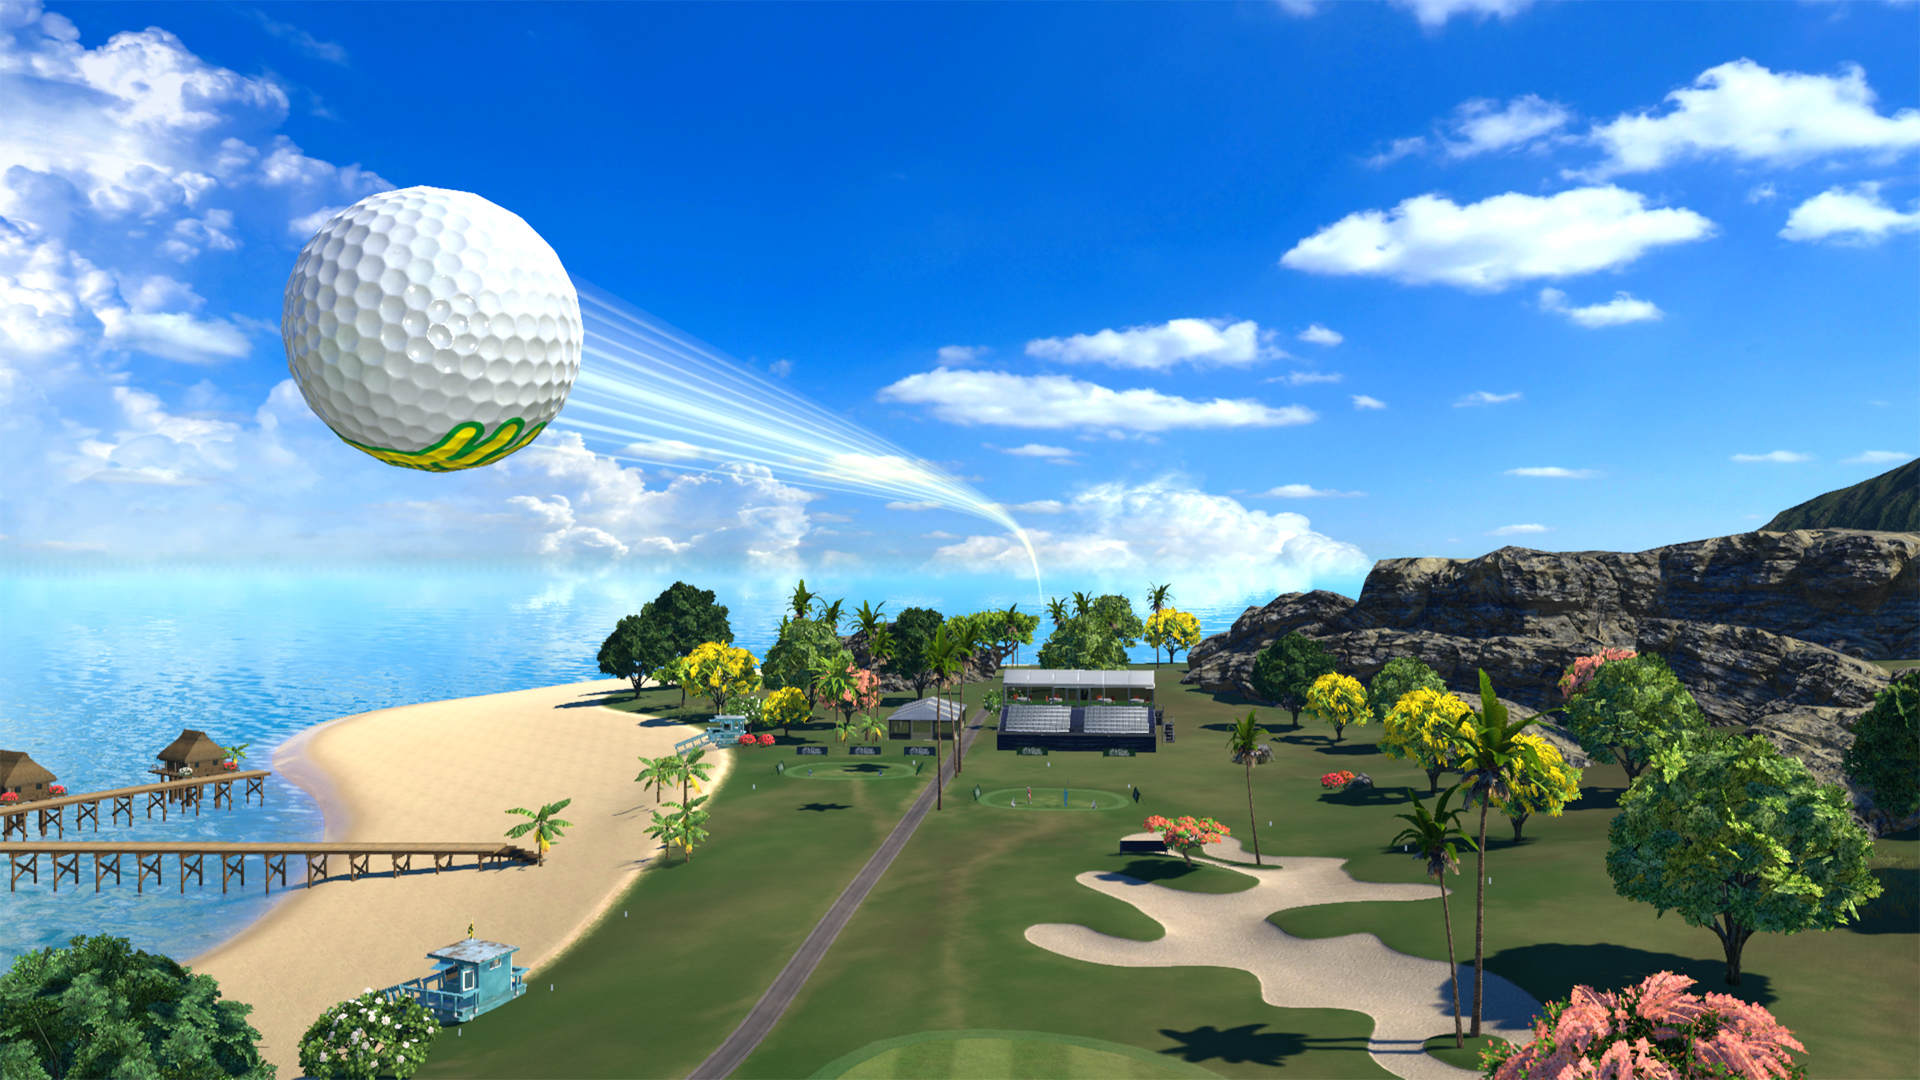 PSVR专用游戏《大众高尔夫VR》将于5月21日发售